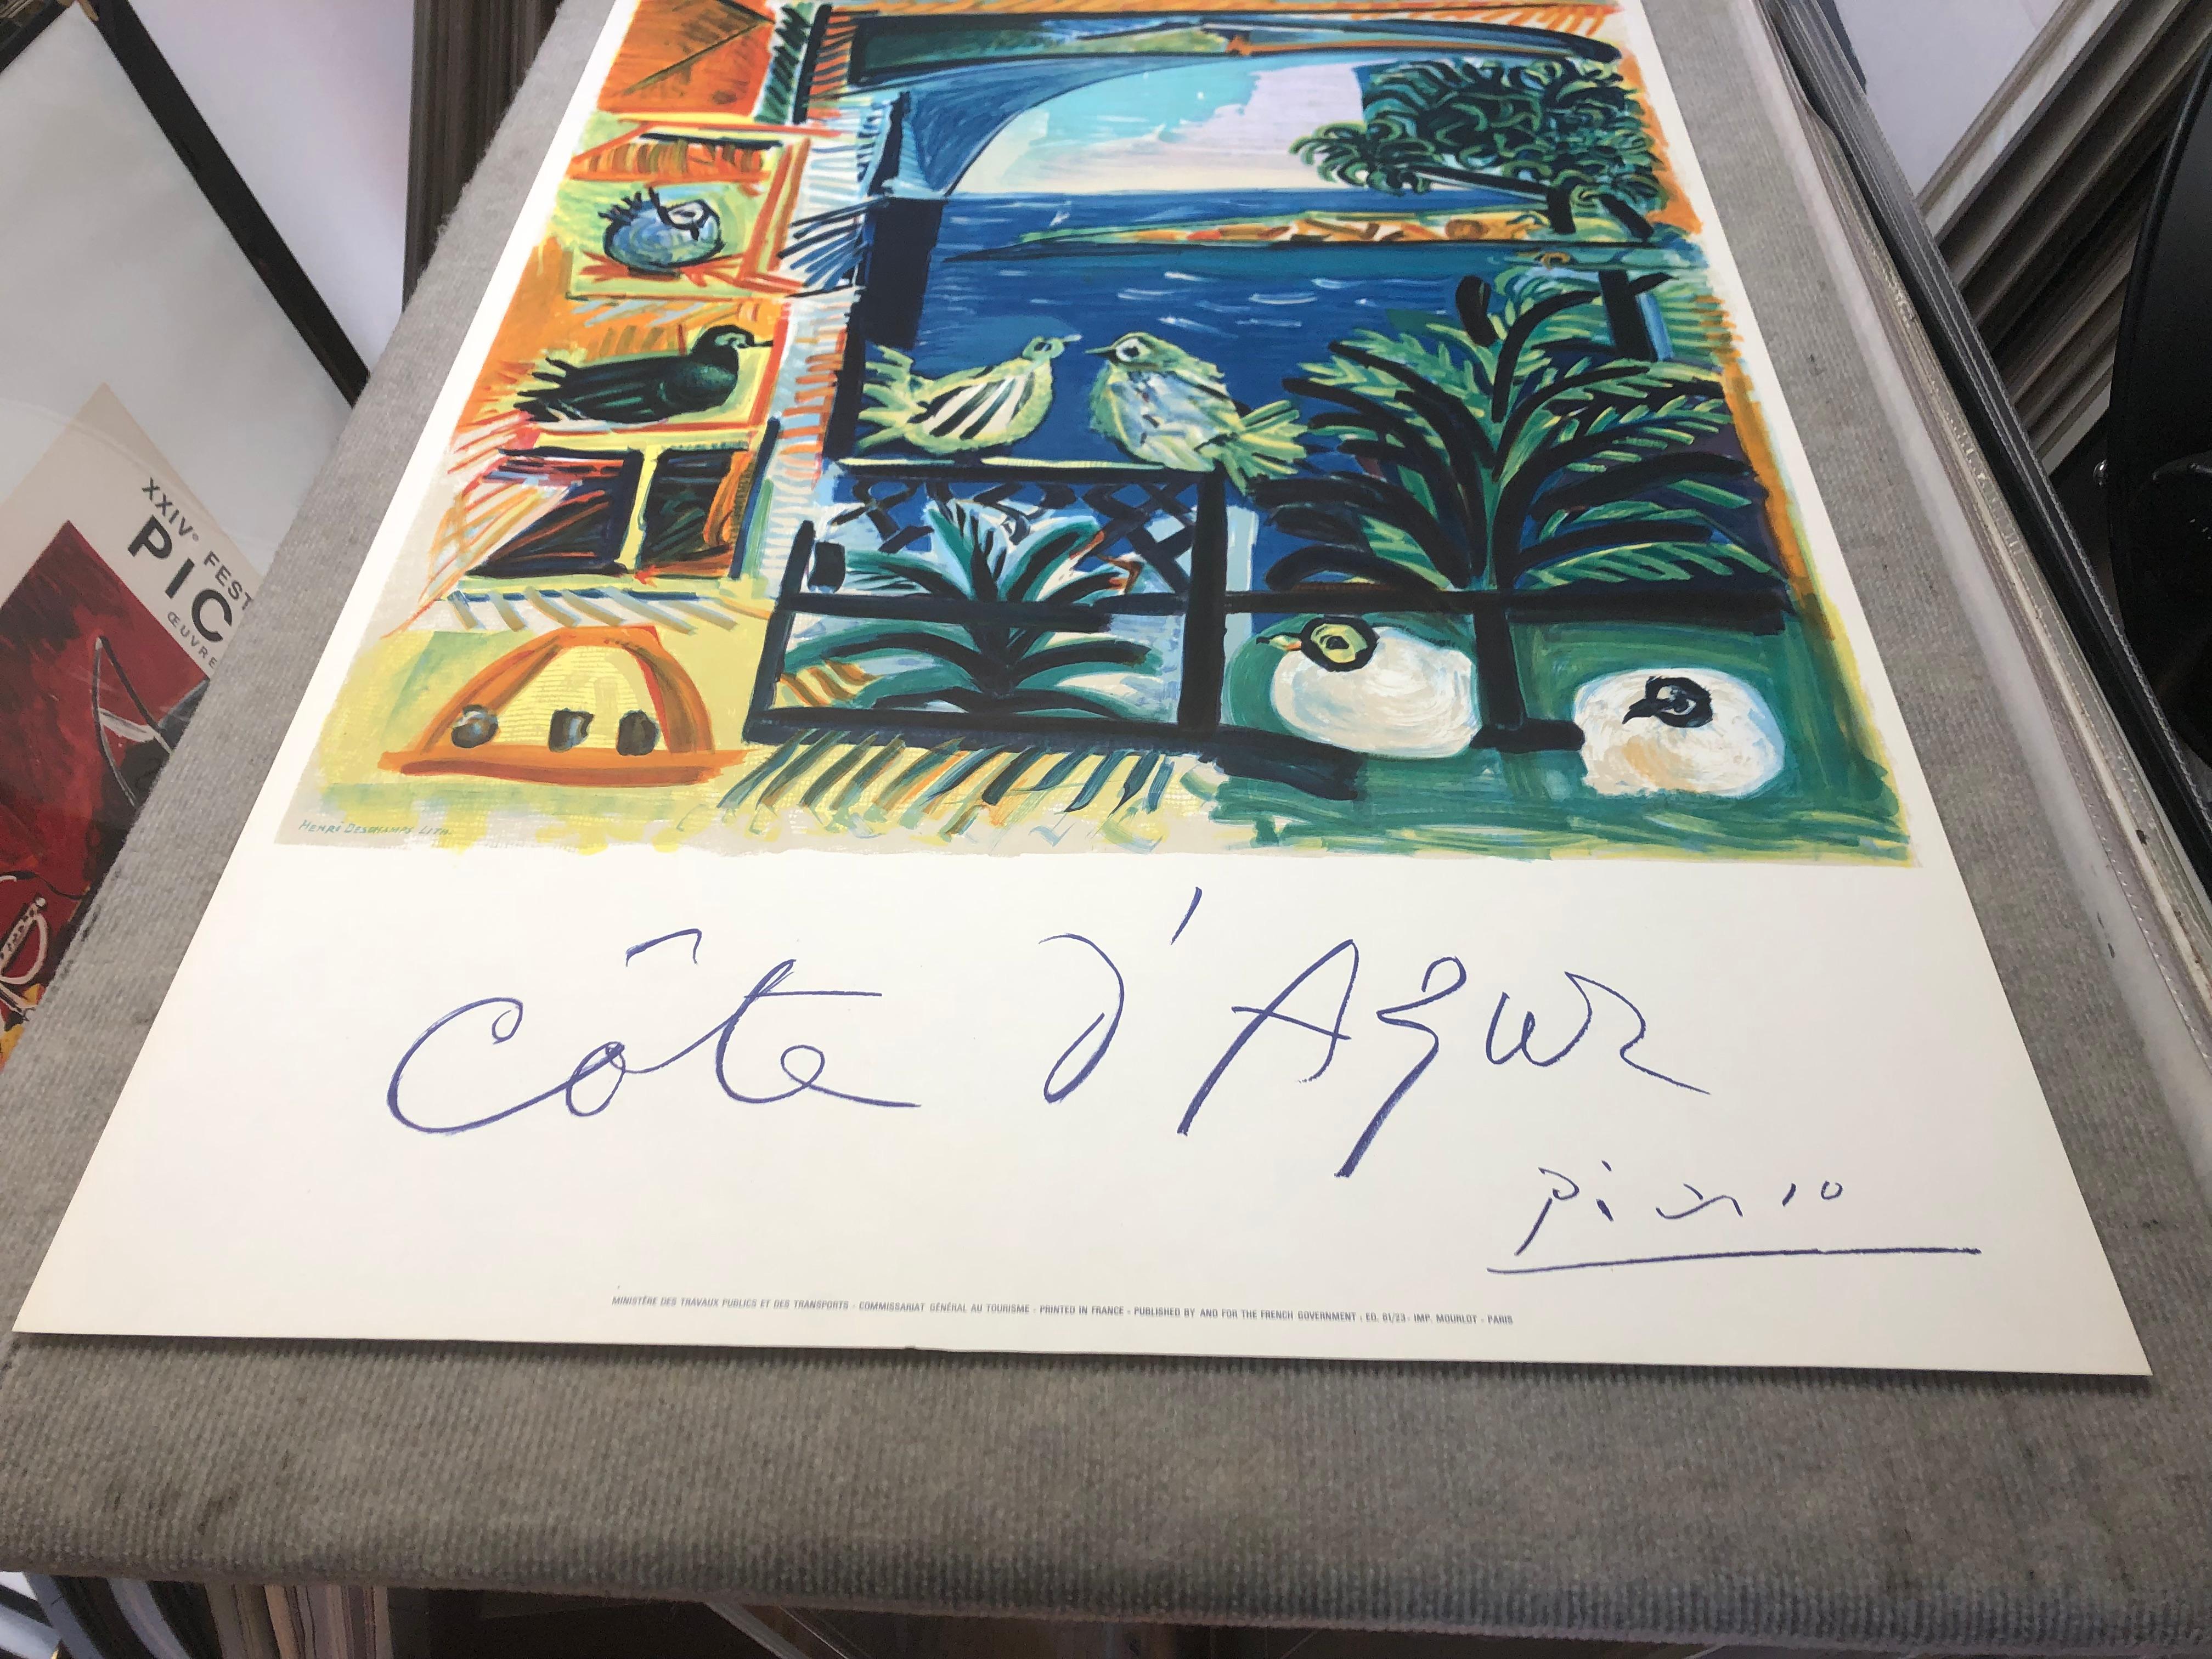 Cote D'Azur Poster Original lithograph - Beige Still-Life Print by Pablo Picasso